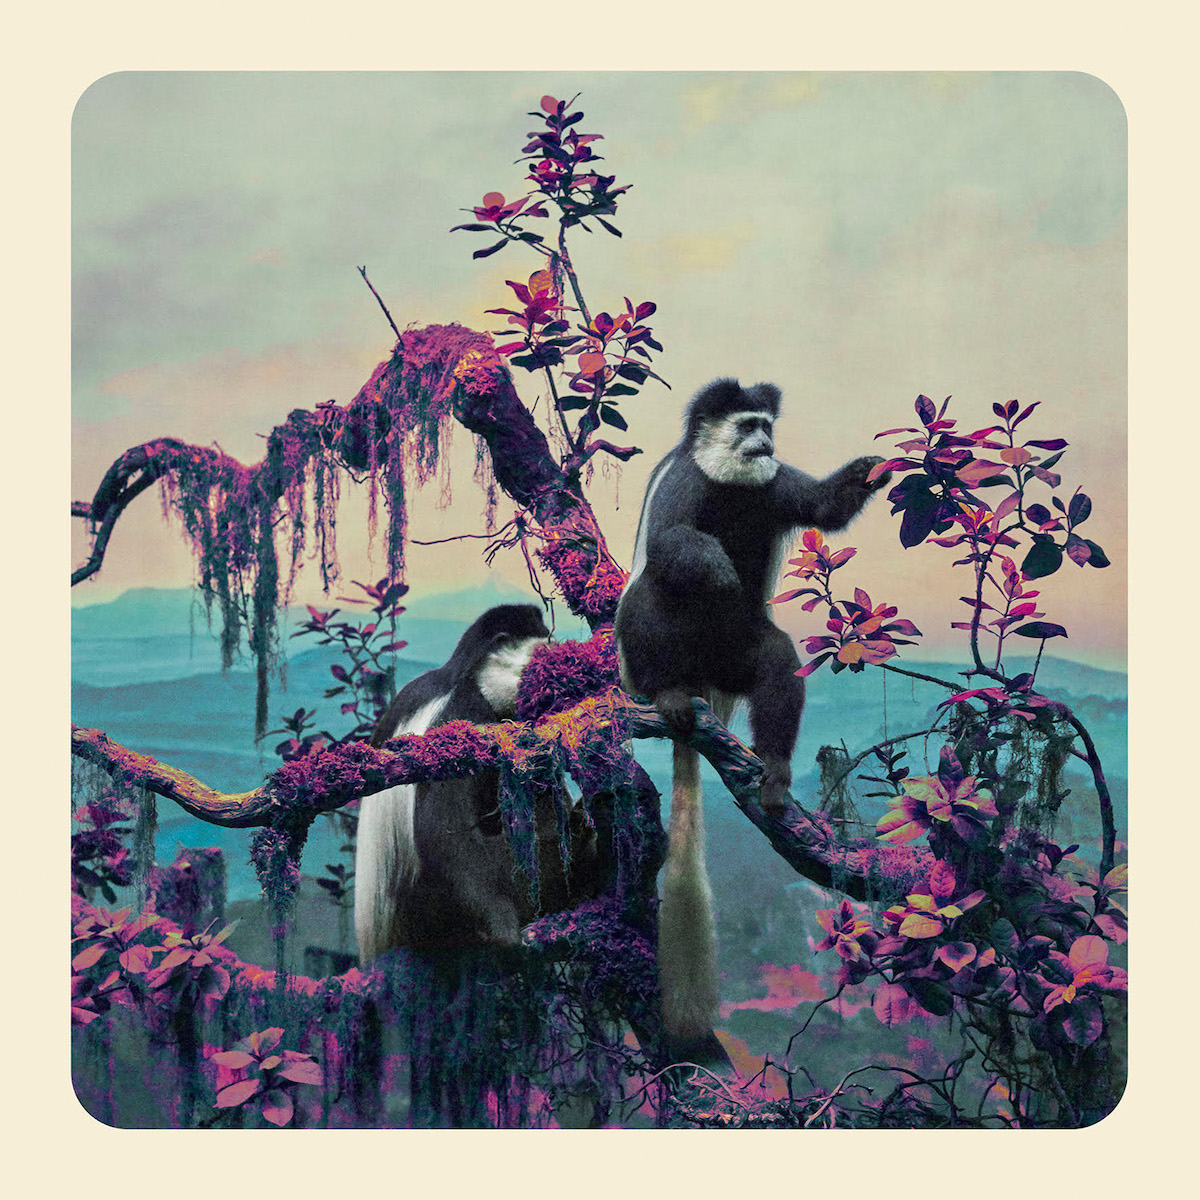 Artistic Photo of Monkey by Jim Naughten